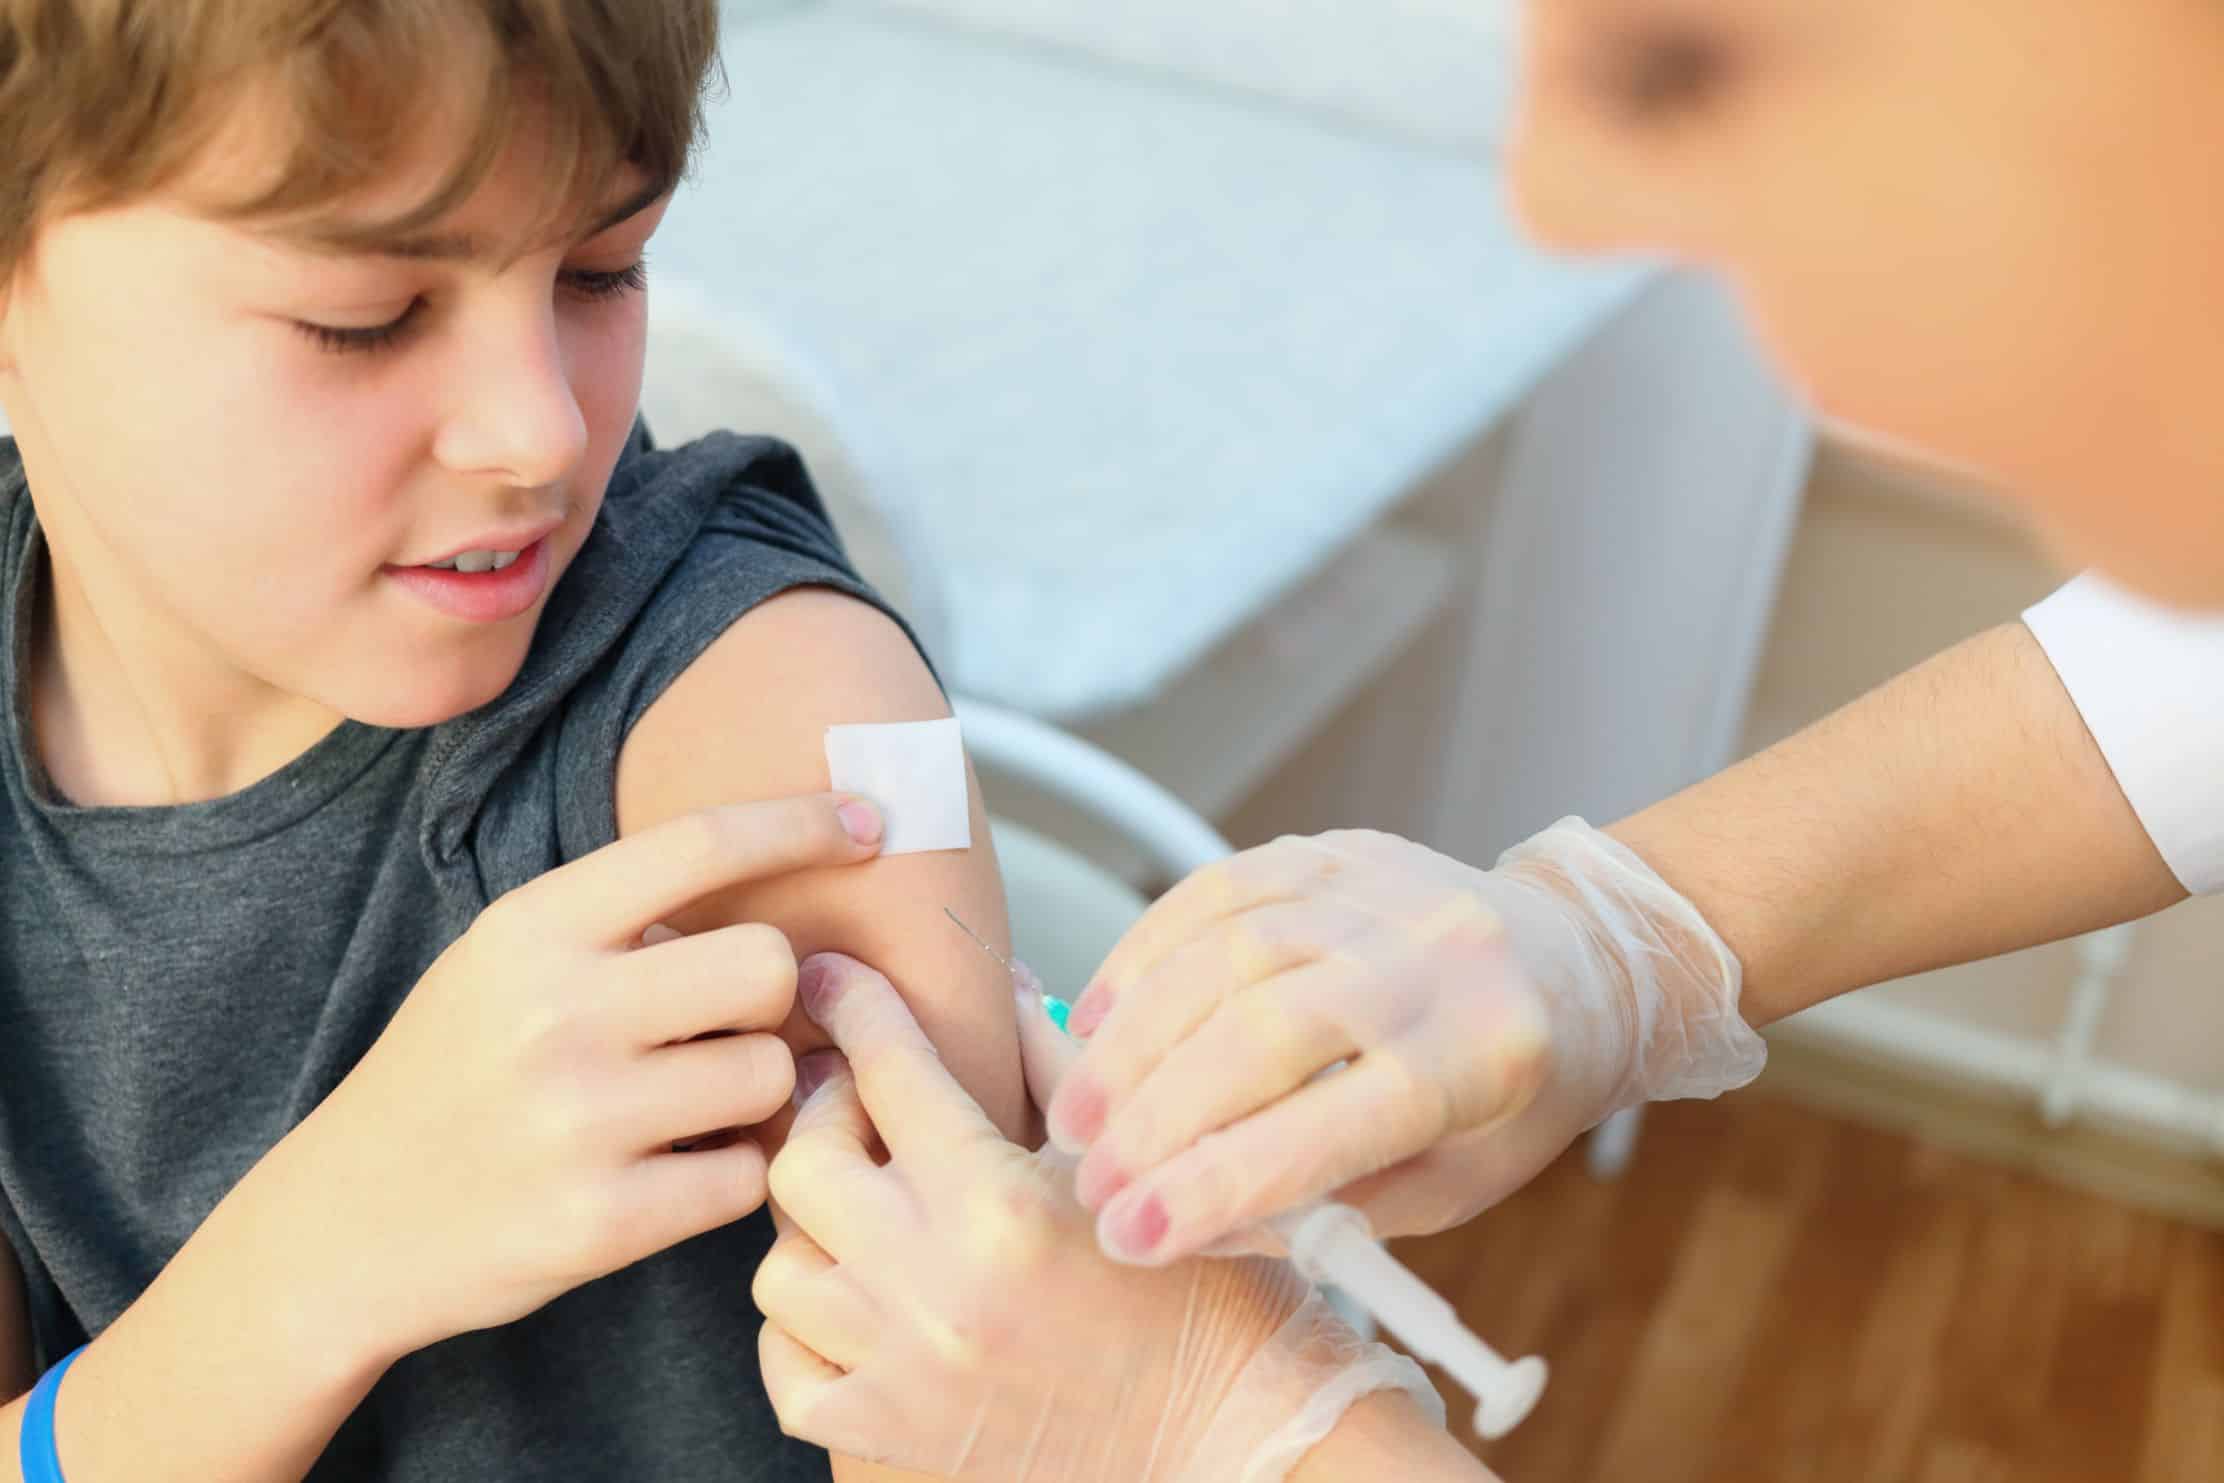 Doctor giving boy an immunisation shot